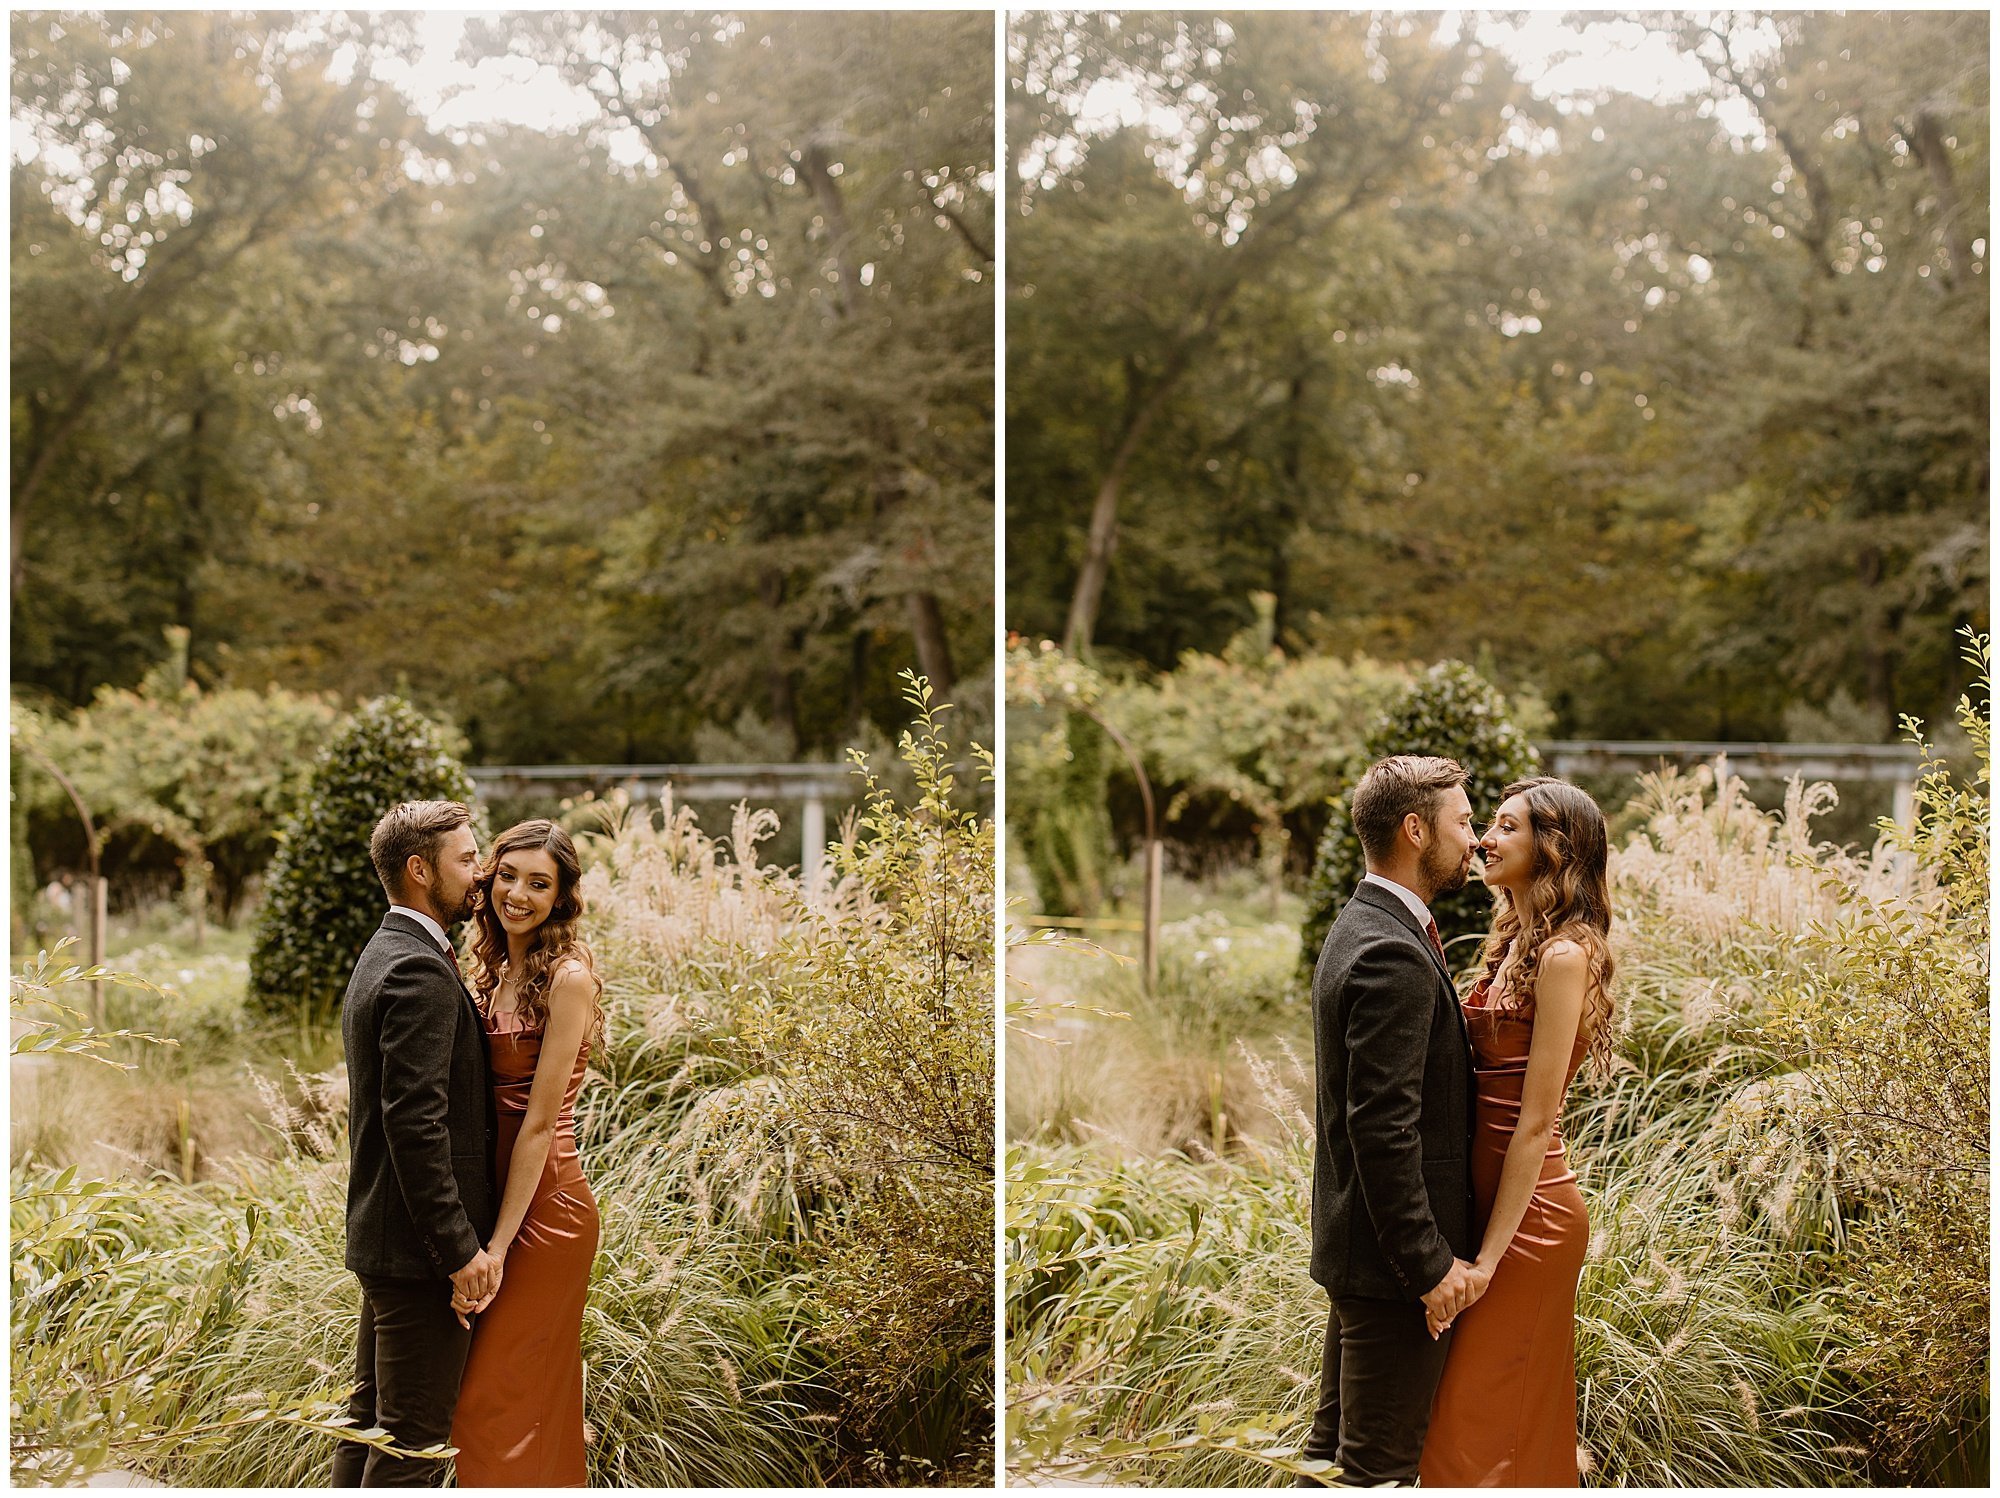 Cator Woolford Gardens, Cator Woolford Gardens Engagement, Atlanta Engagement Photographer, Atlanta Engagement/Wedding Photographer